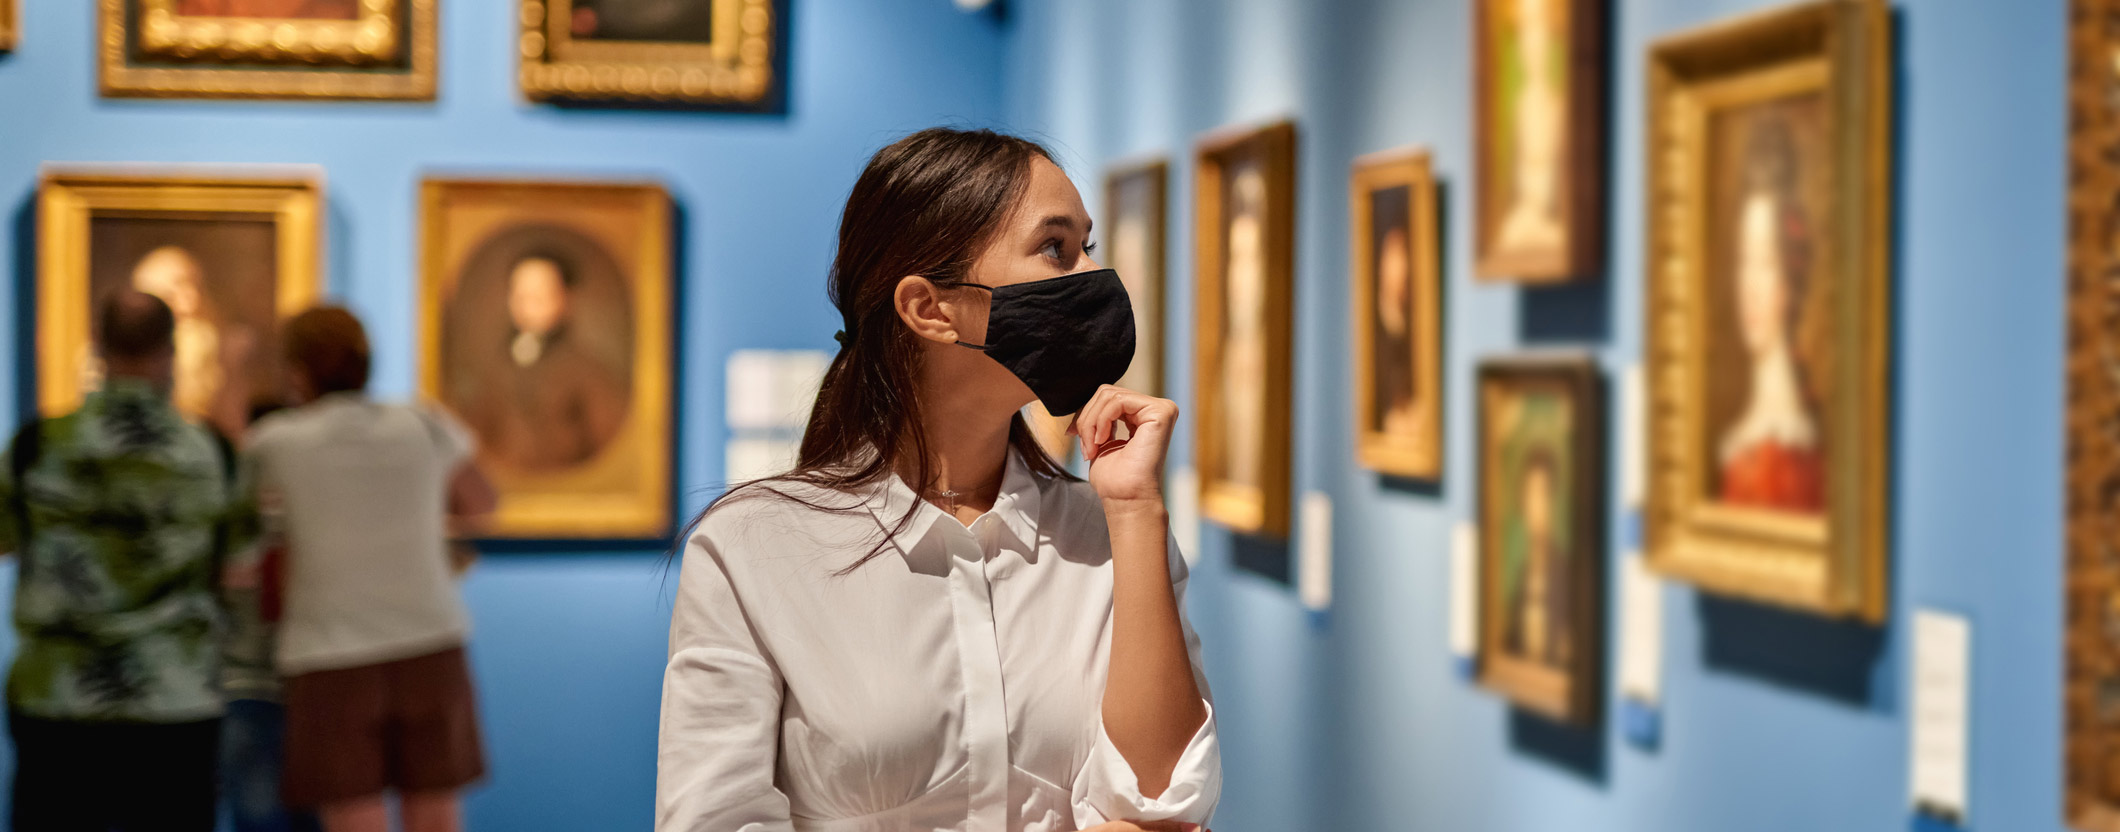 Masked Woman Looking at Painting